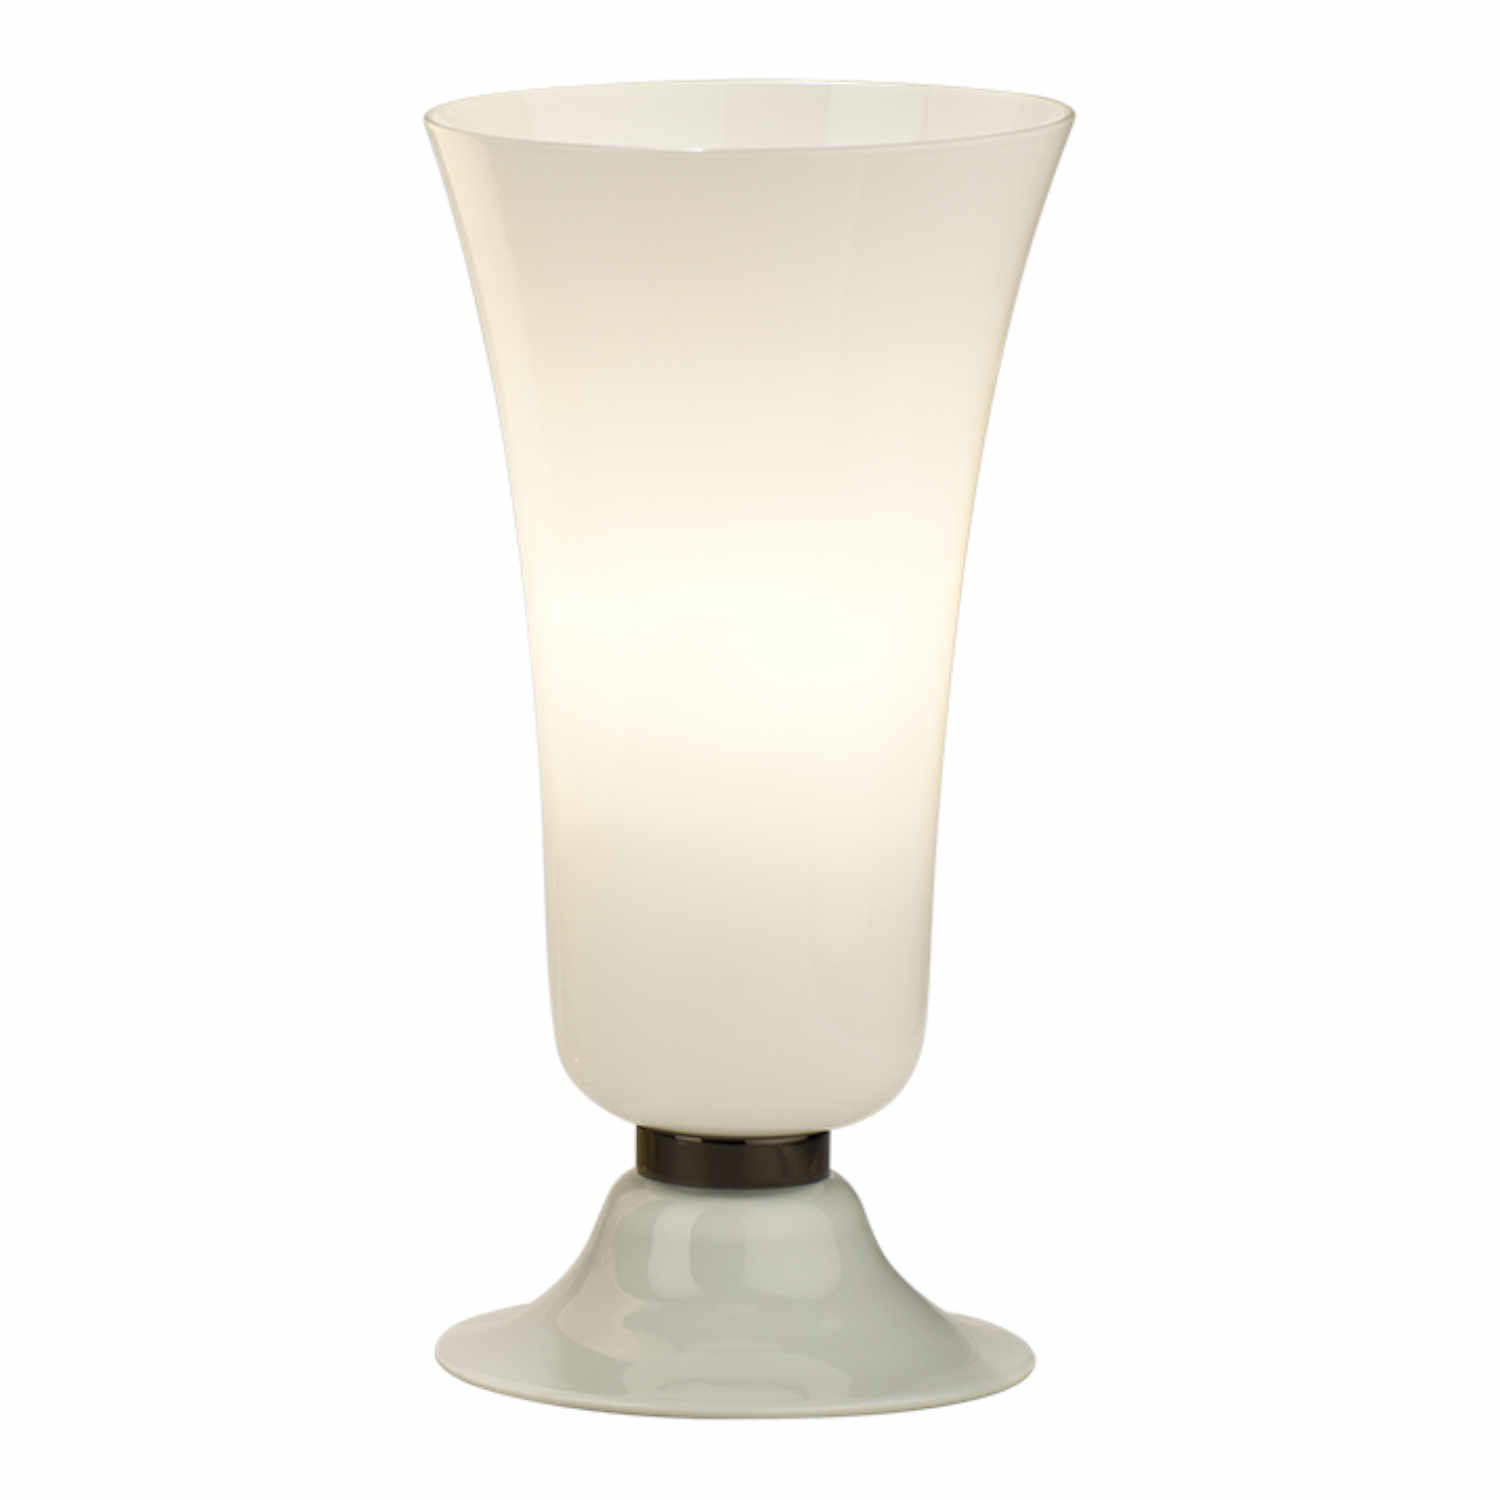 ANNI TRENTA LED Tischleuchte, Grösse h. 32 cm, Farbe milk-white von Venini